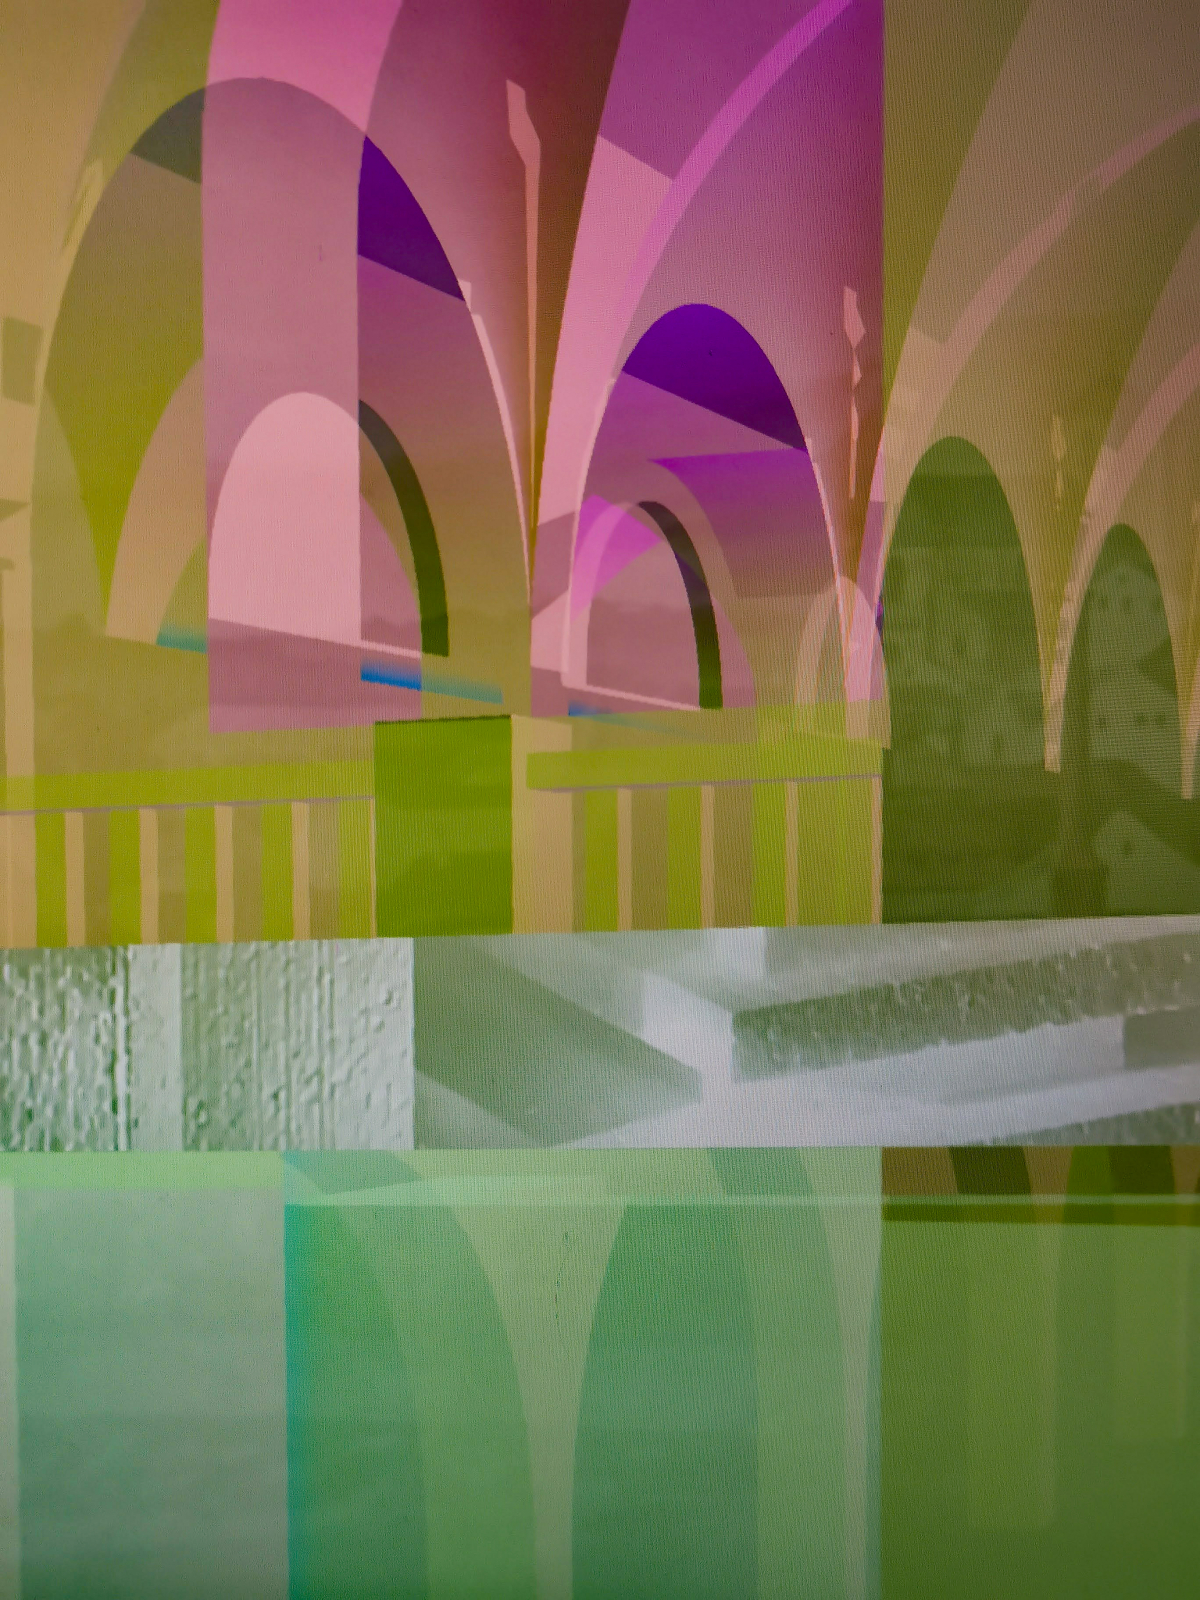 Screenshoty z AR aplikace − Ivo Louda, POZOROVAT − Průhled Otvorem Za Oponou Restaurovaného Obrazu Veduty Arciměsta Turnov, 2022